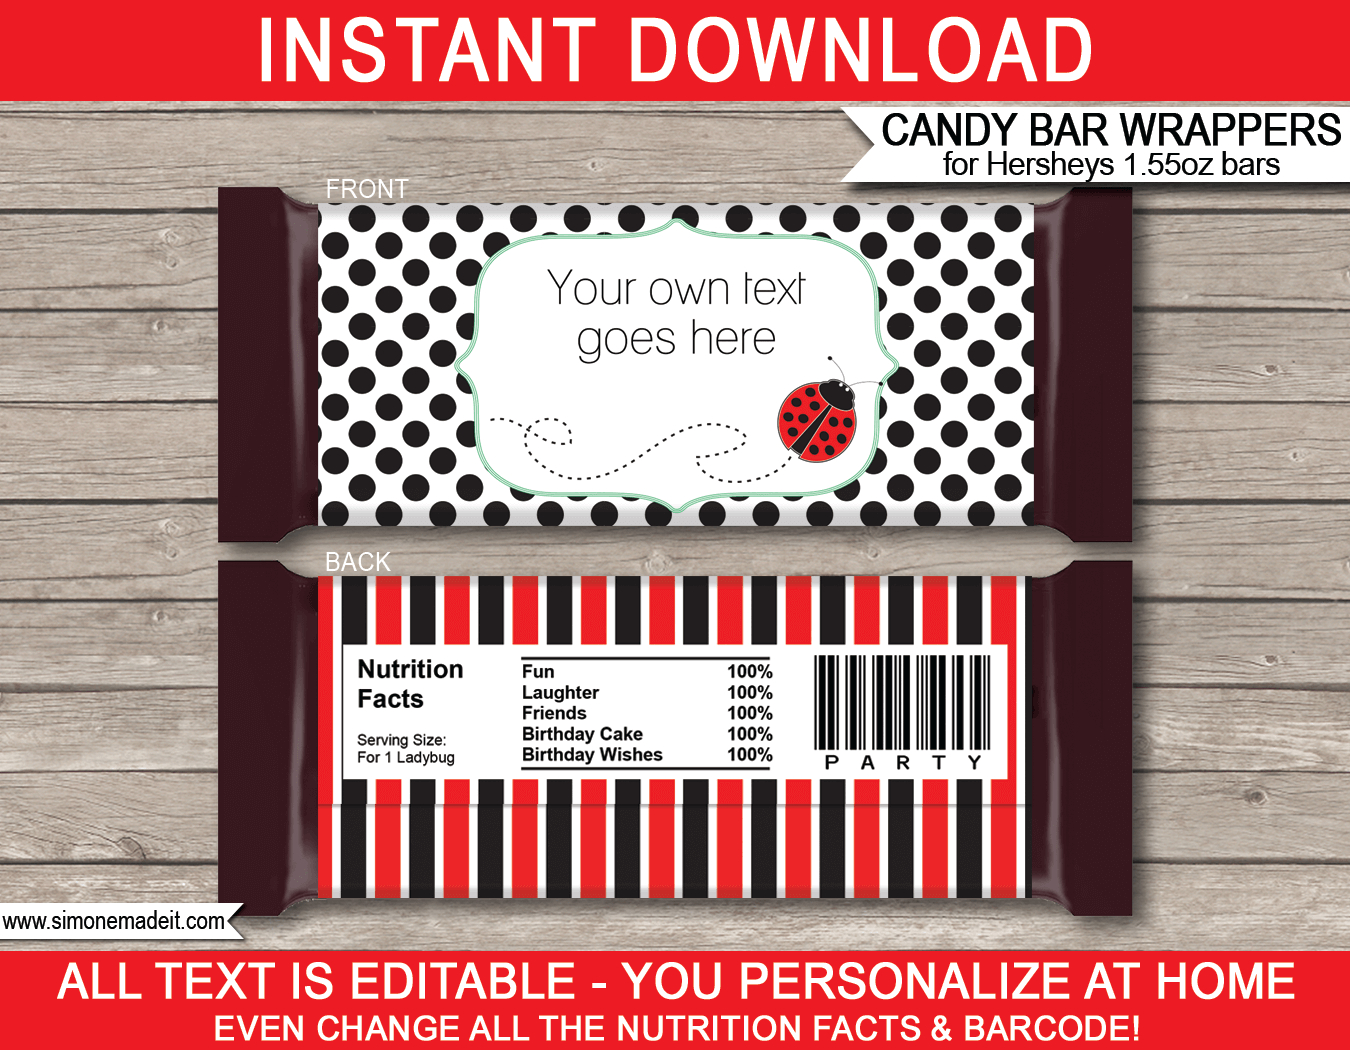 009 Ladybug Hershey Candy Bar Wrapper Template Awesome Ideas Within Candy Bar Wrapper Template Microsoft Word